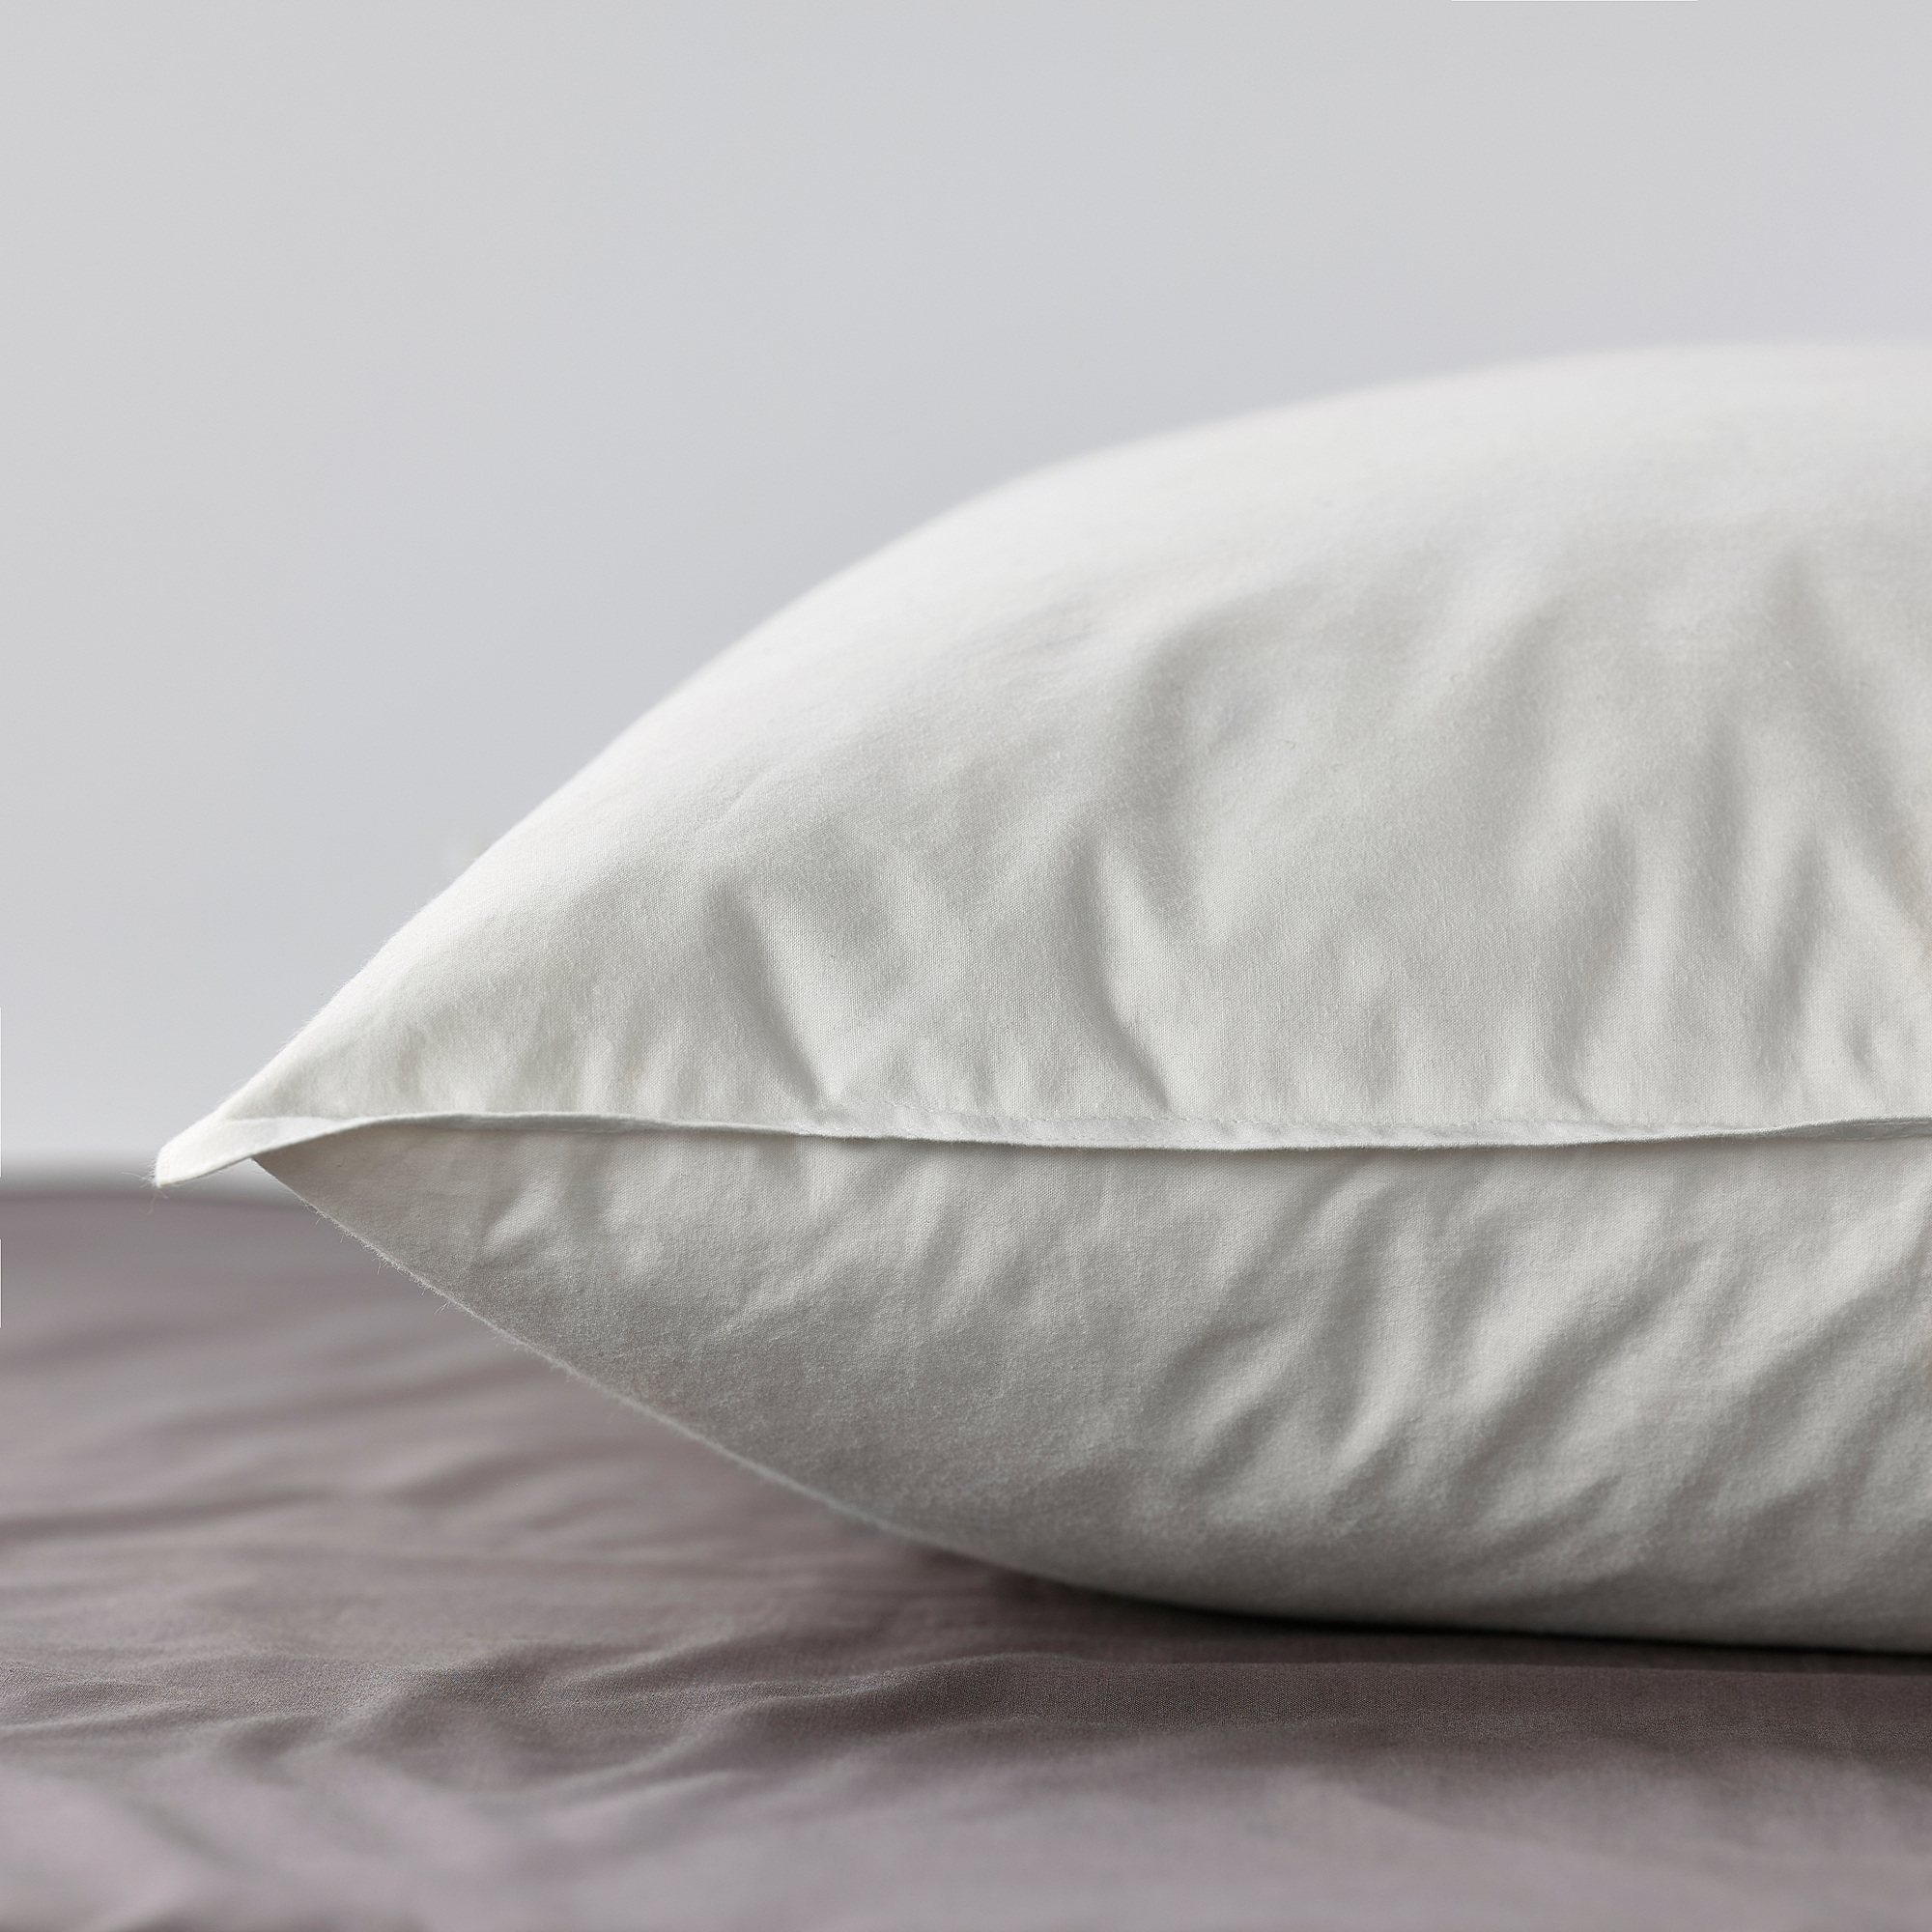 LUNDTRAV pillow, low